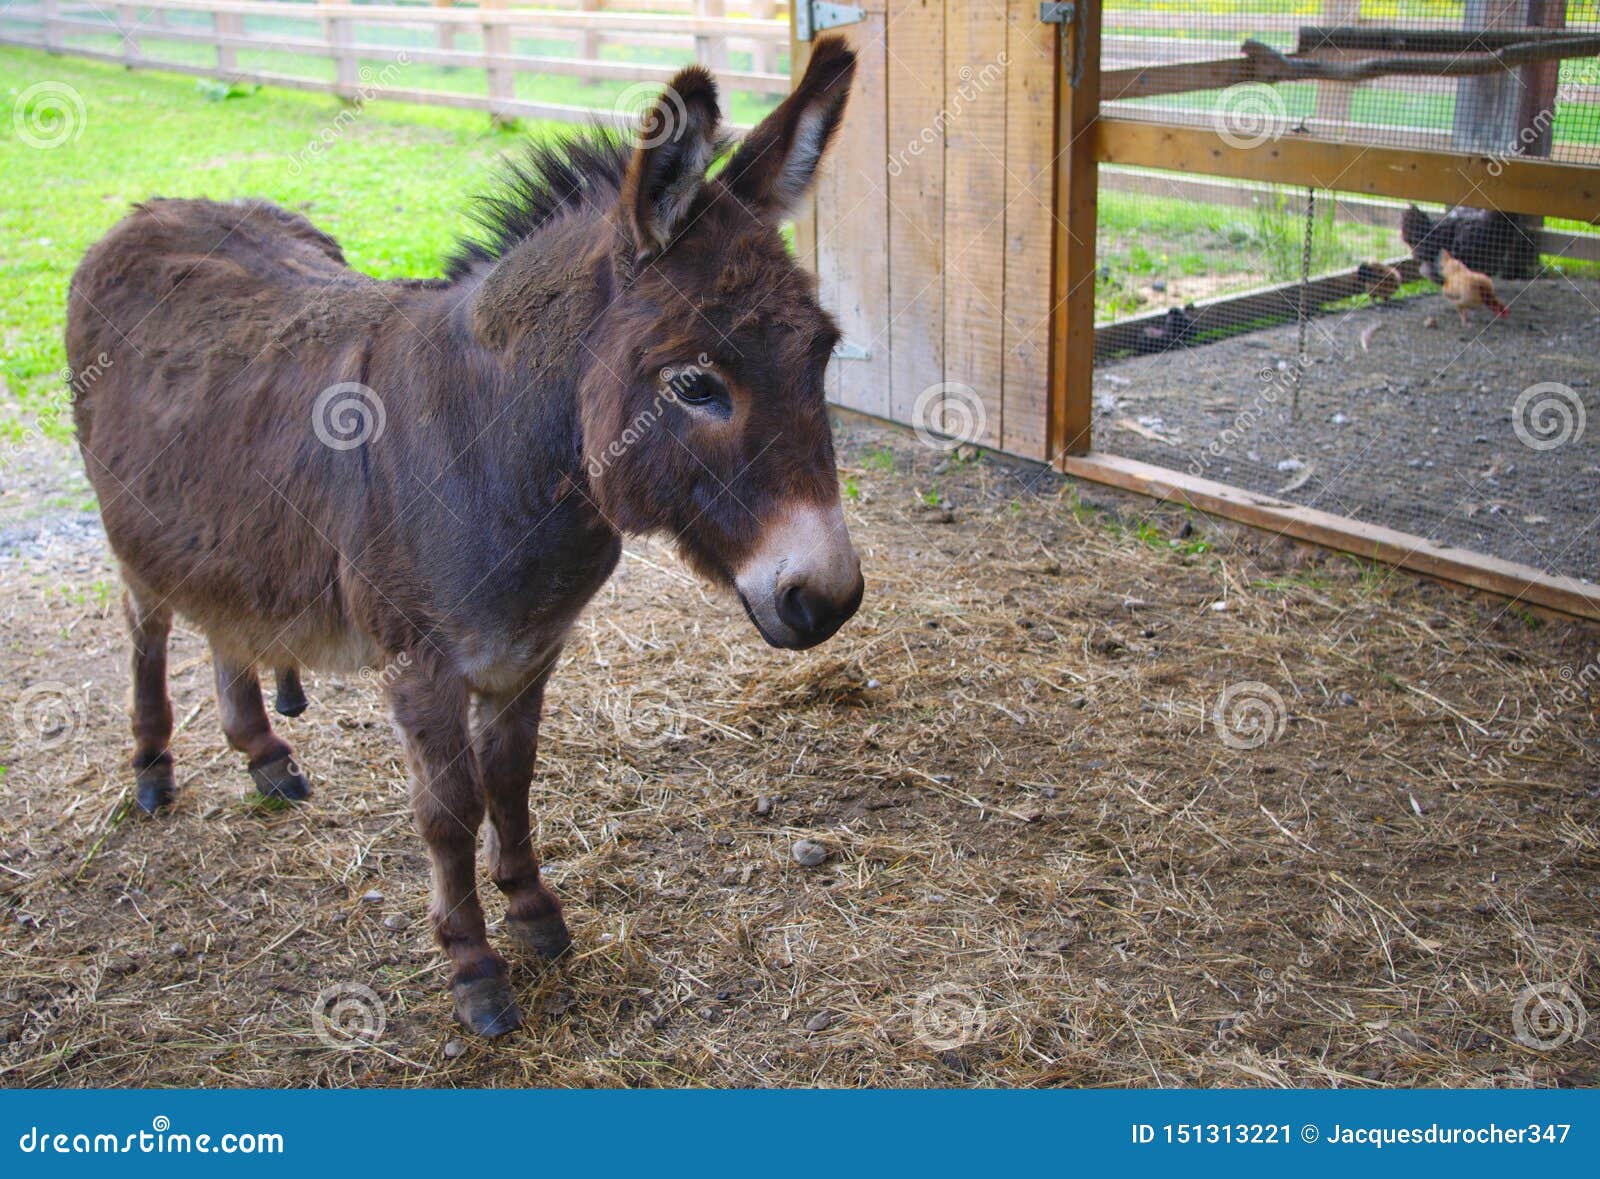 https://thumbs.dreamstime.com/z/donkey-jackass-farm-mammal-mule-domestic-animal-jackass-mule-donkey-country-farming-agriculture-animal-enclosure-rural-151313221.jpg